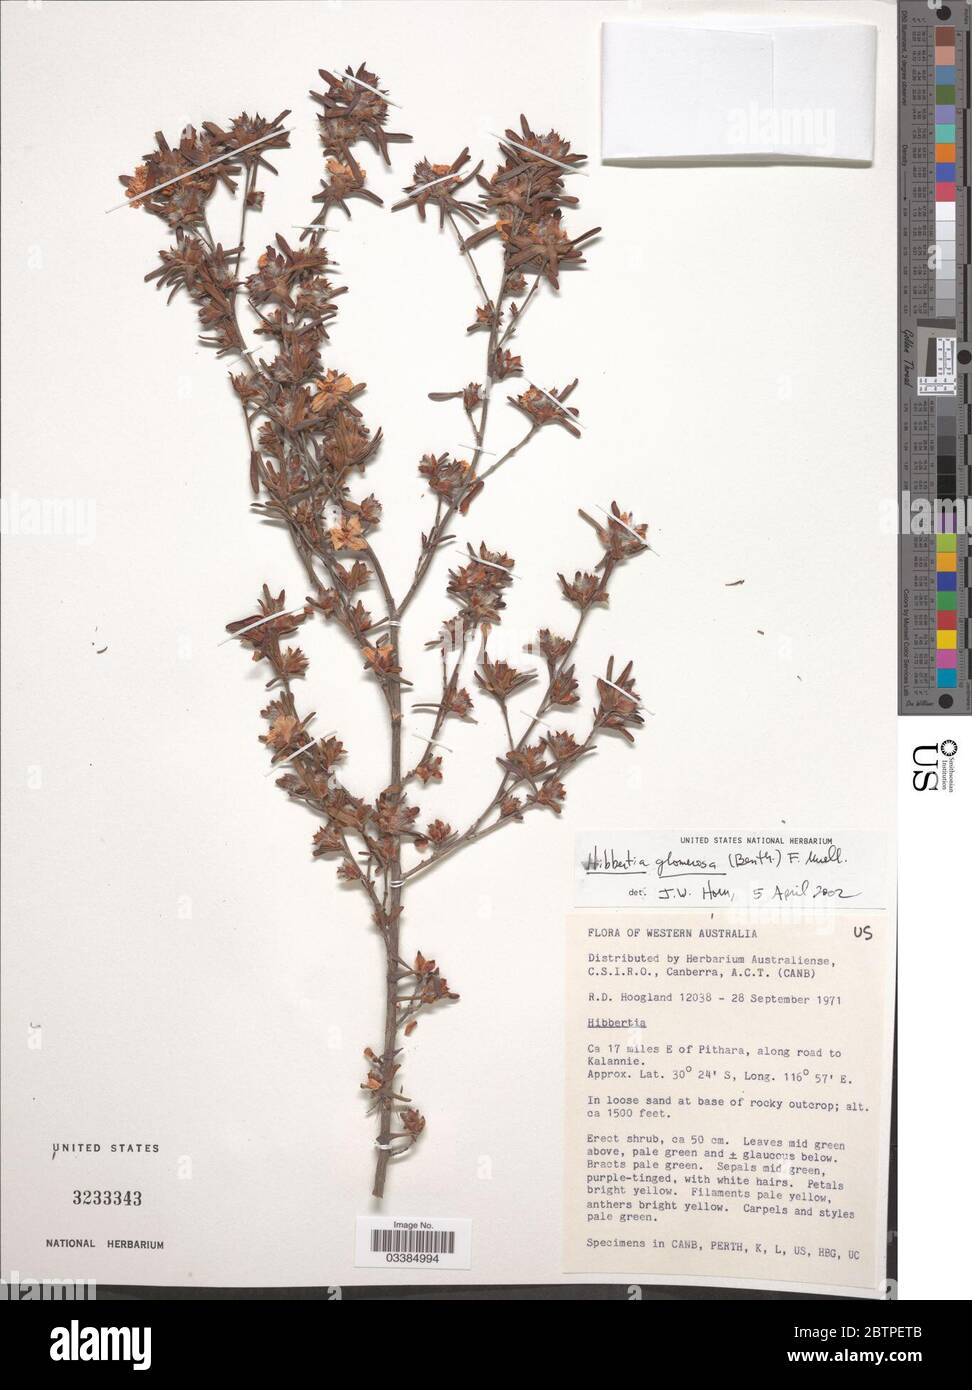 Hibbertia glomerosa F Muell. Stock Photo